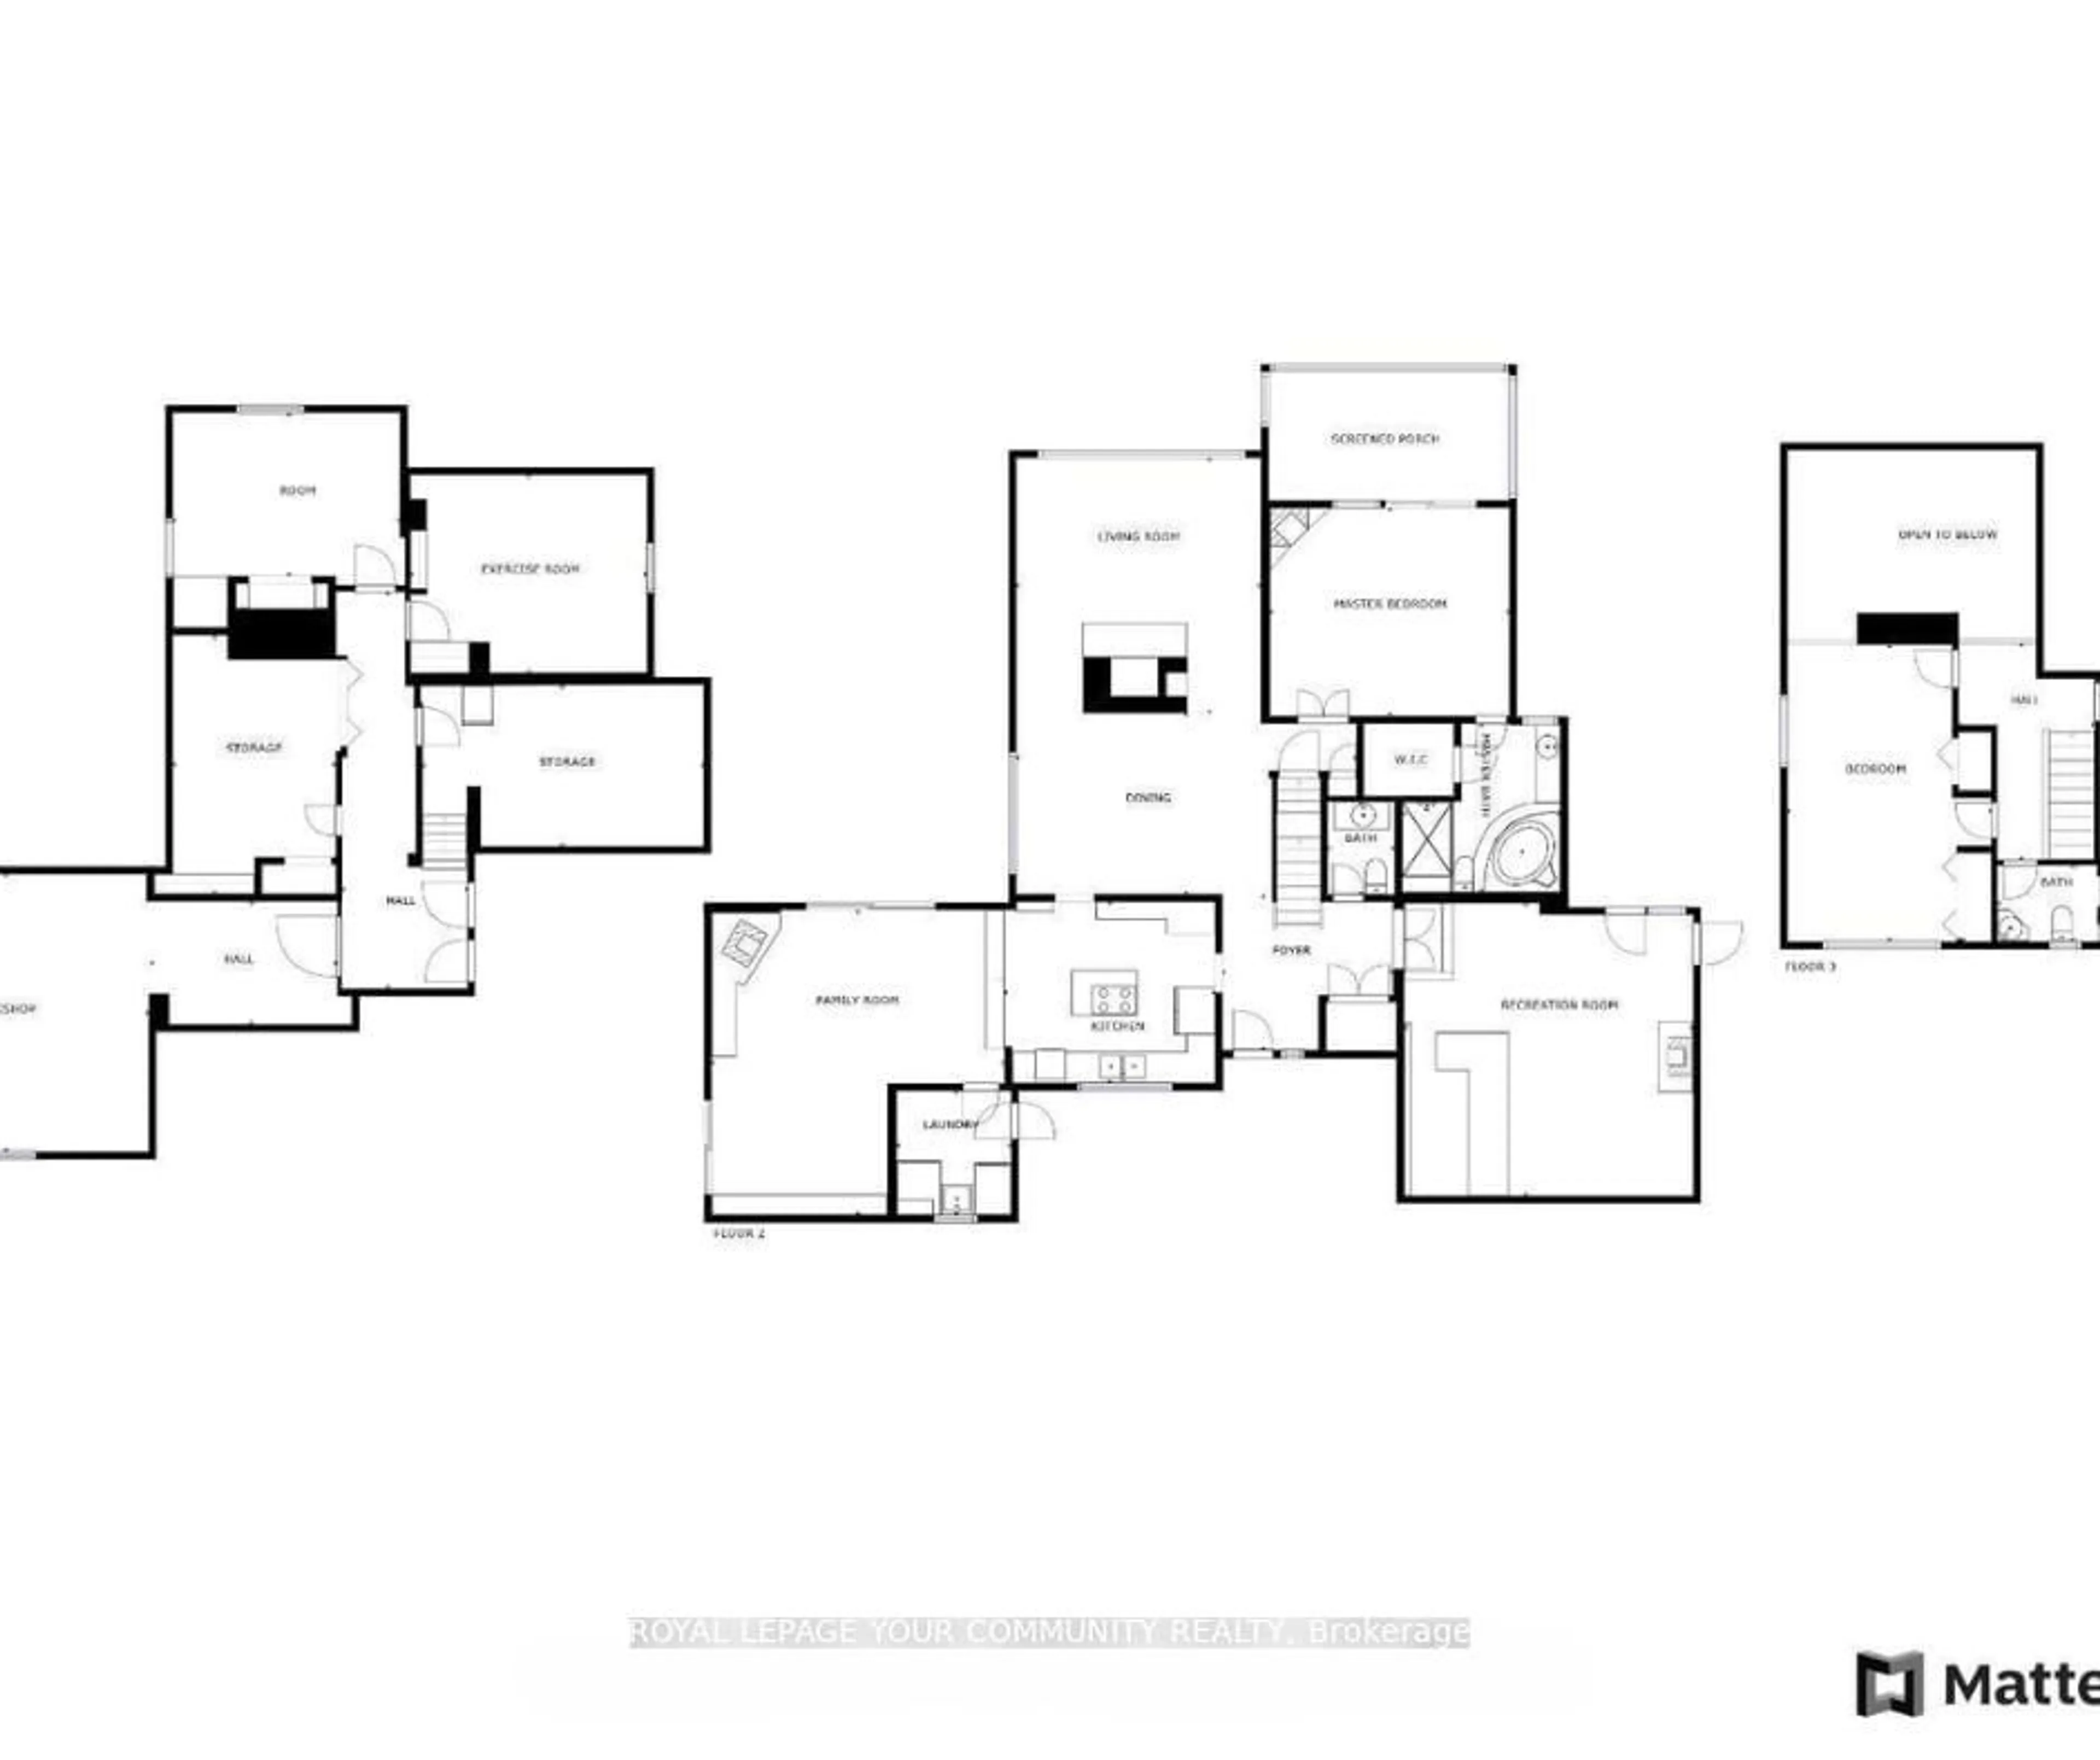 Floor plan for 527 Big Bay Point Rd, Innisfil Ontario L9S 2N4